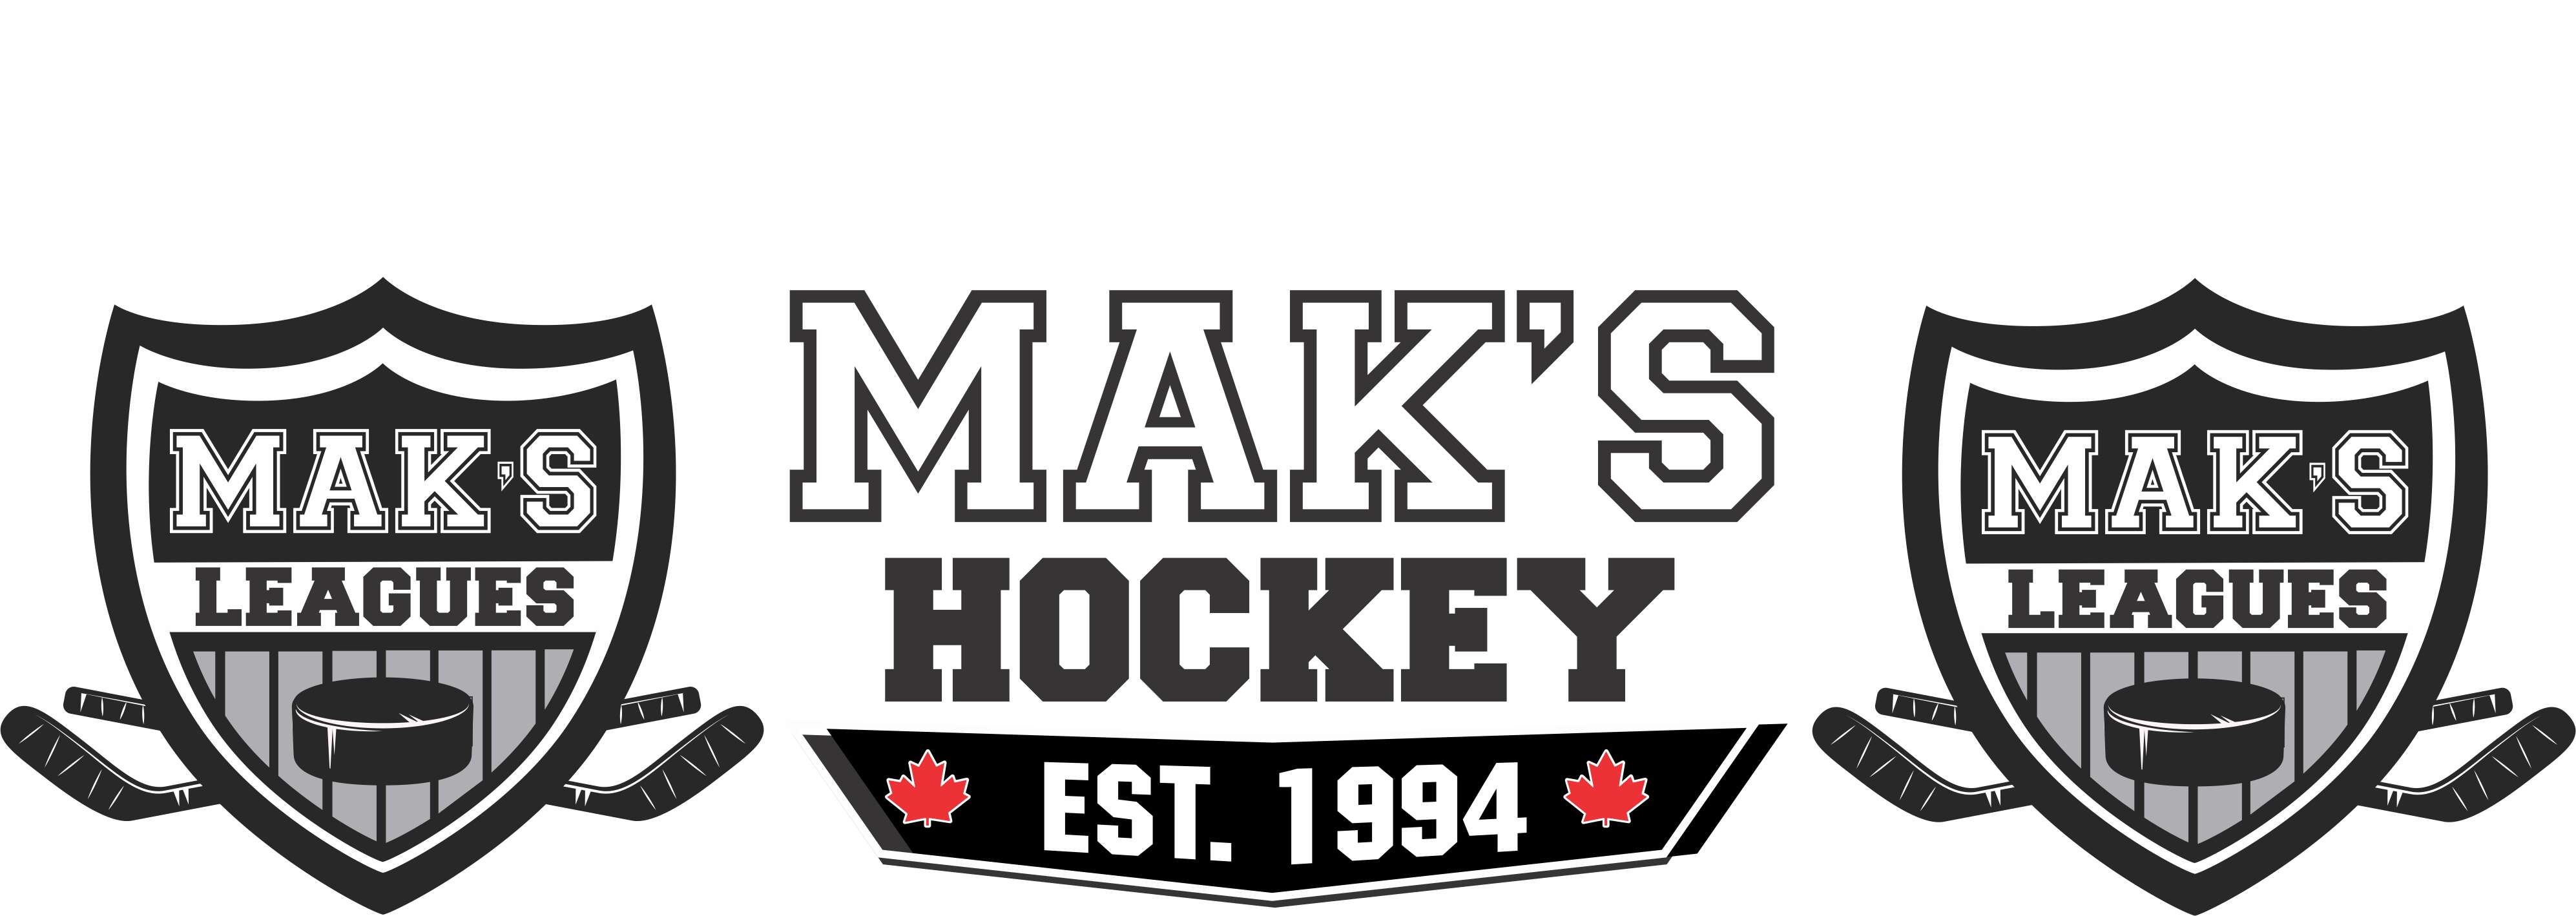 Mak's Hockey League